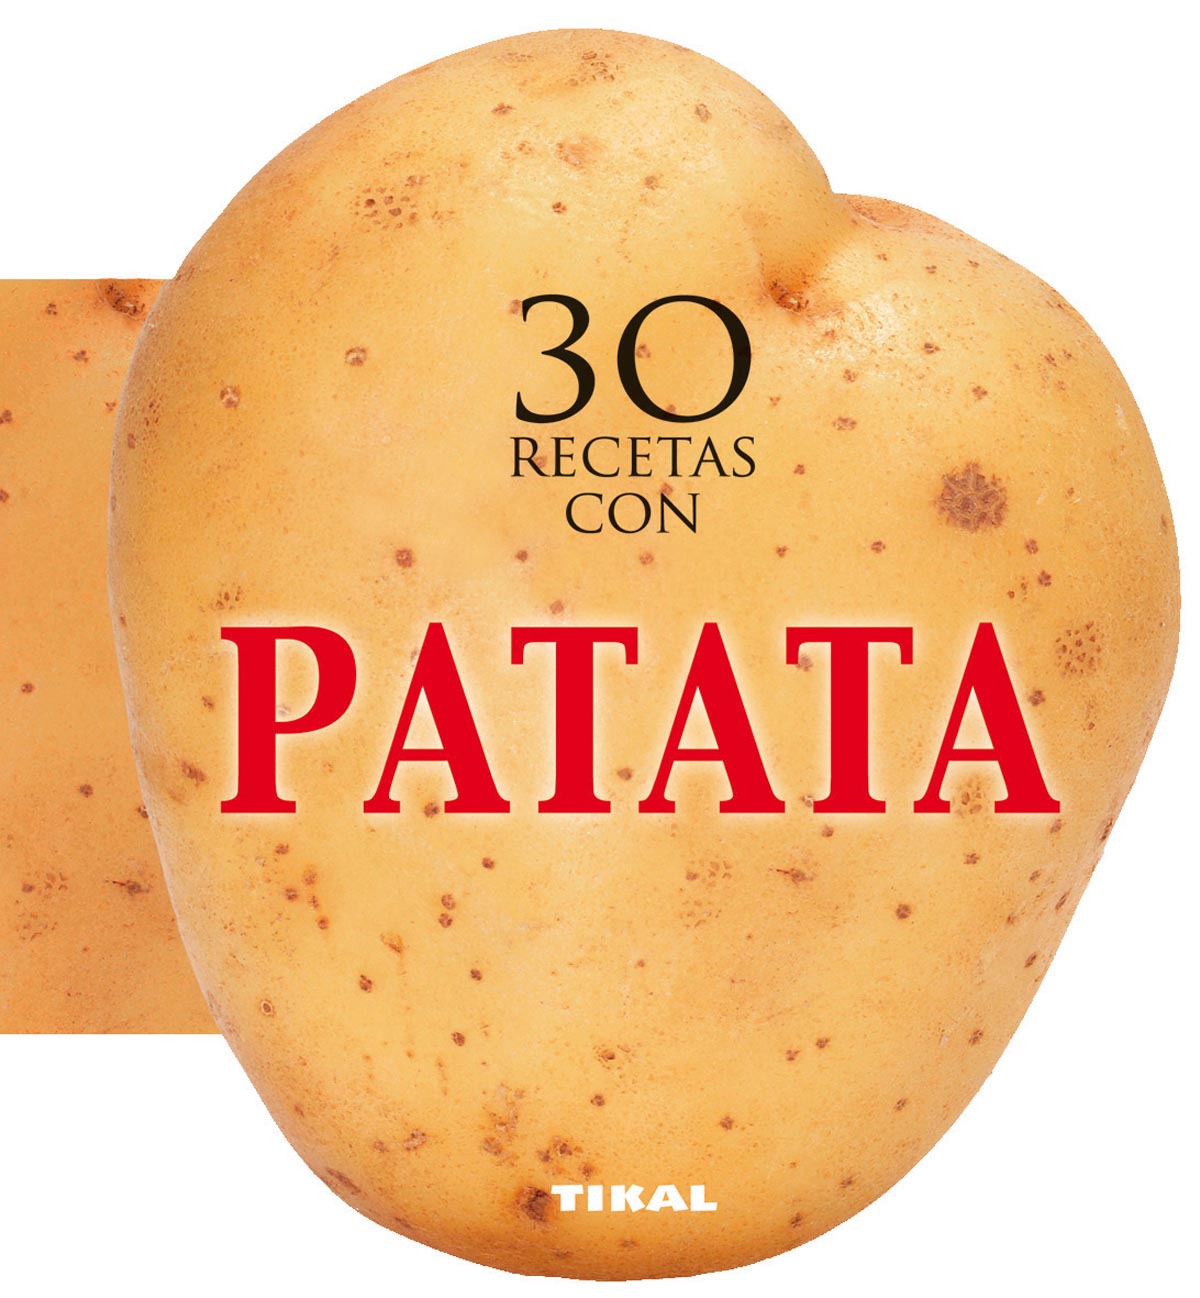 30 recetas con patata